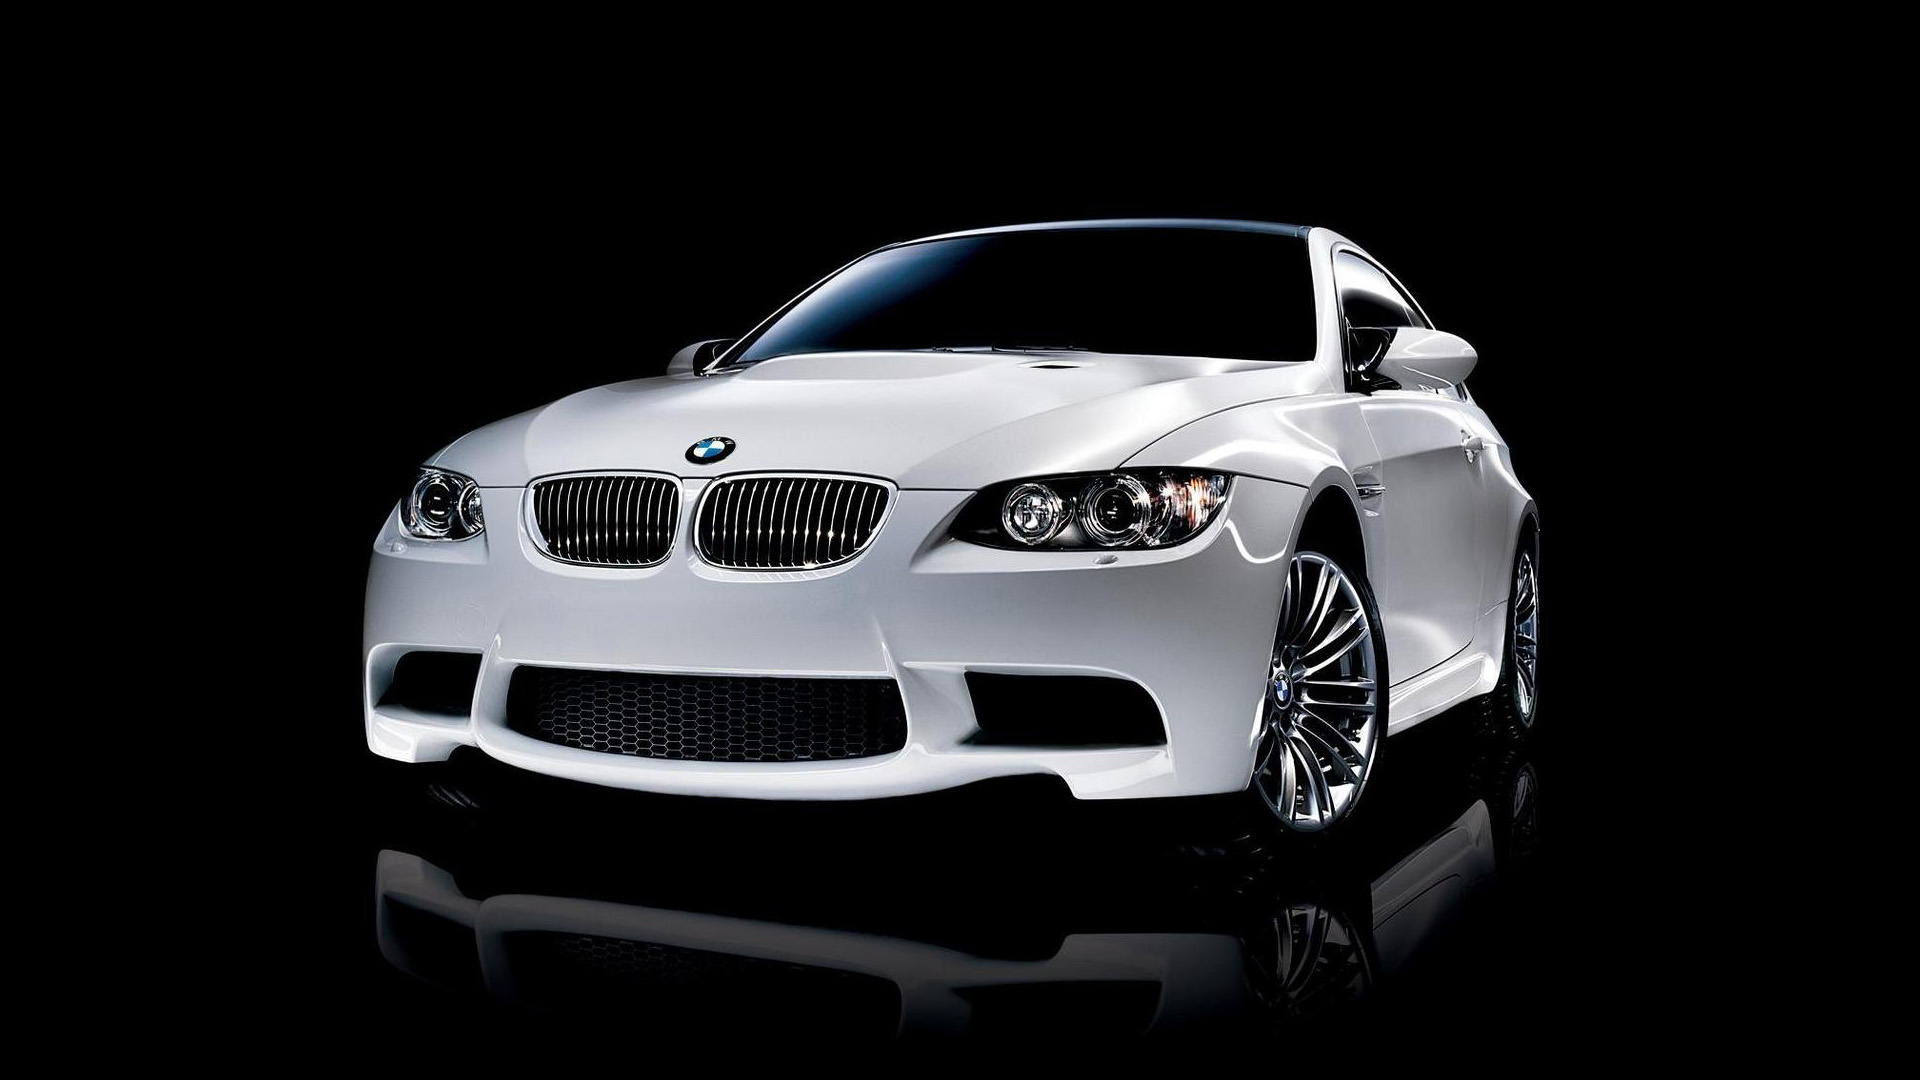 BMW m3 Car HD Wallpaper 1080p - 9to5 Car Wallpapers